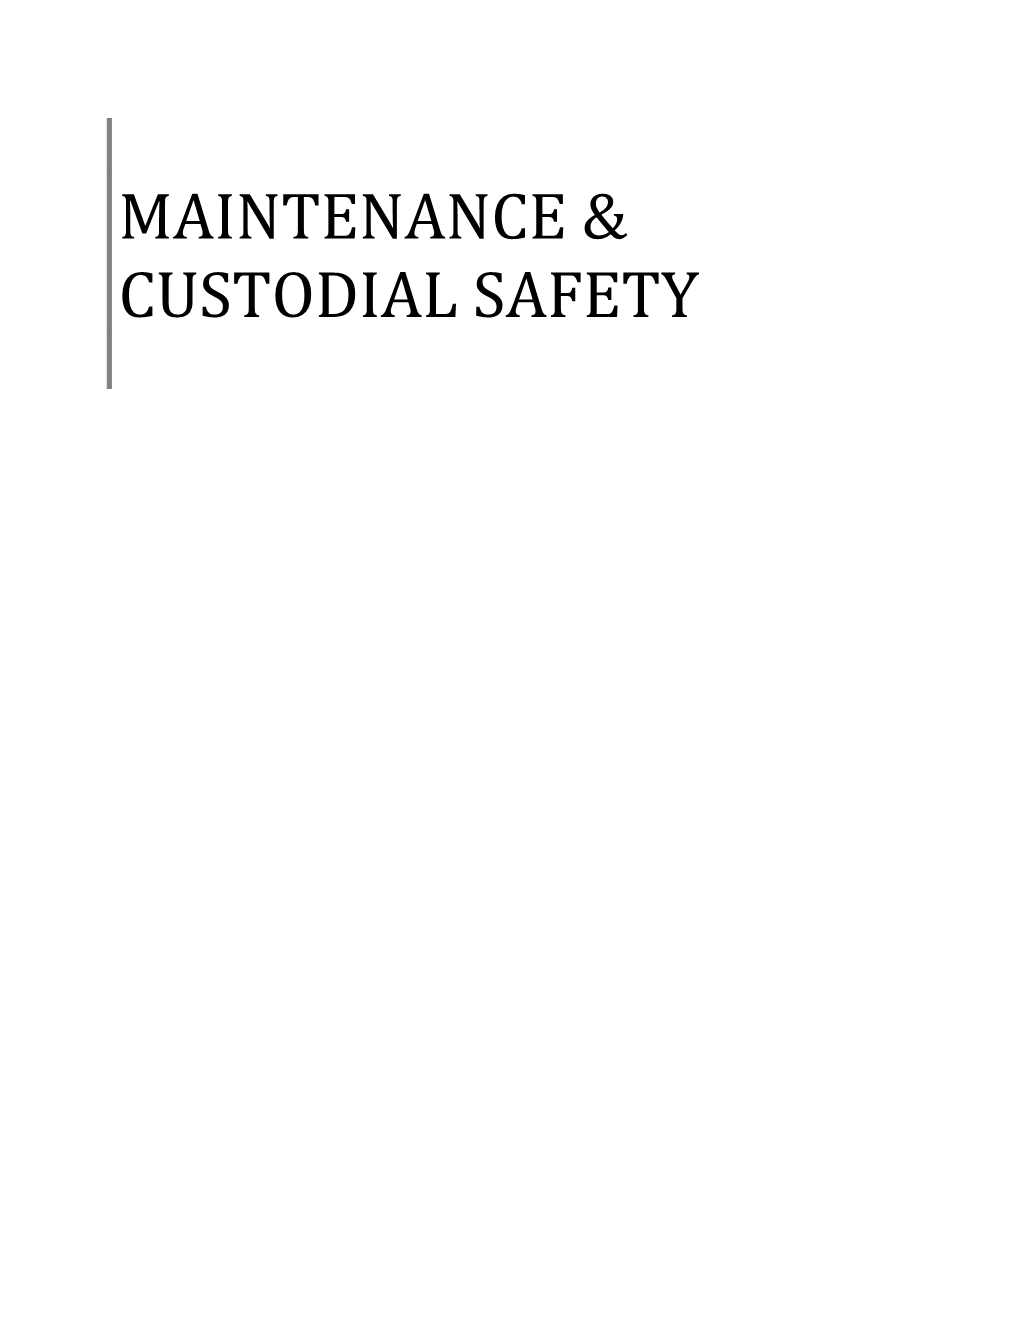 Maintenance & Custodial Safety